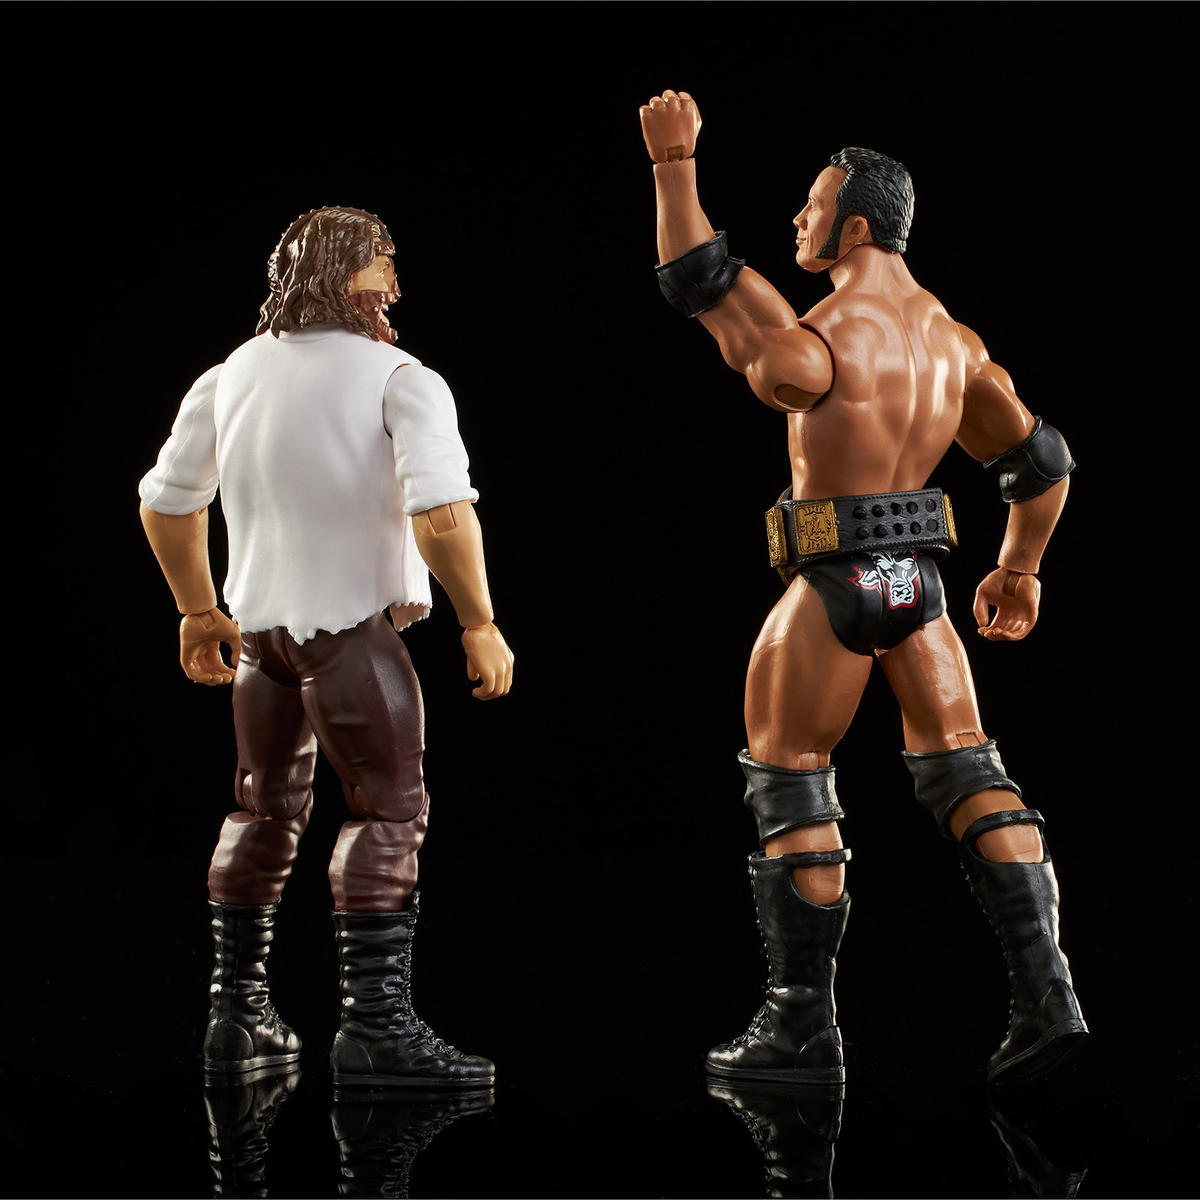 2023 WWE Mattel Basic Championship Showdown Series 14 Mankind & The Rock